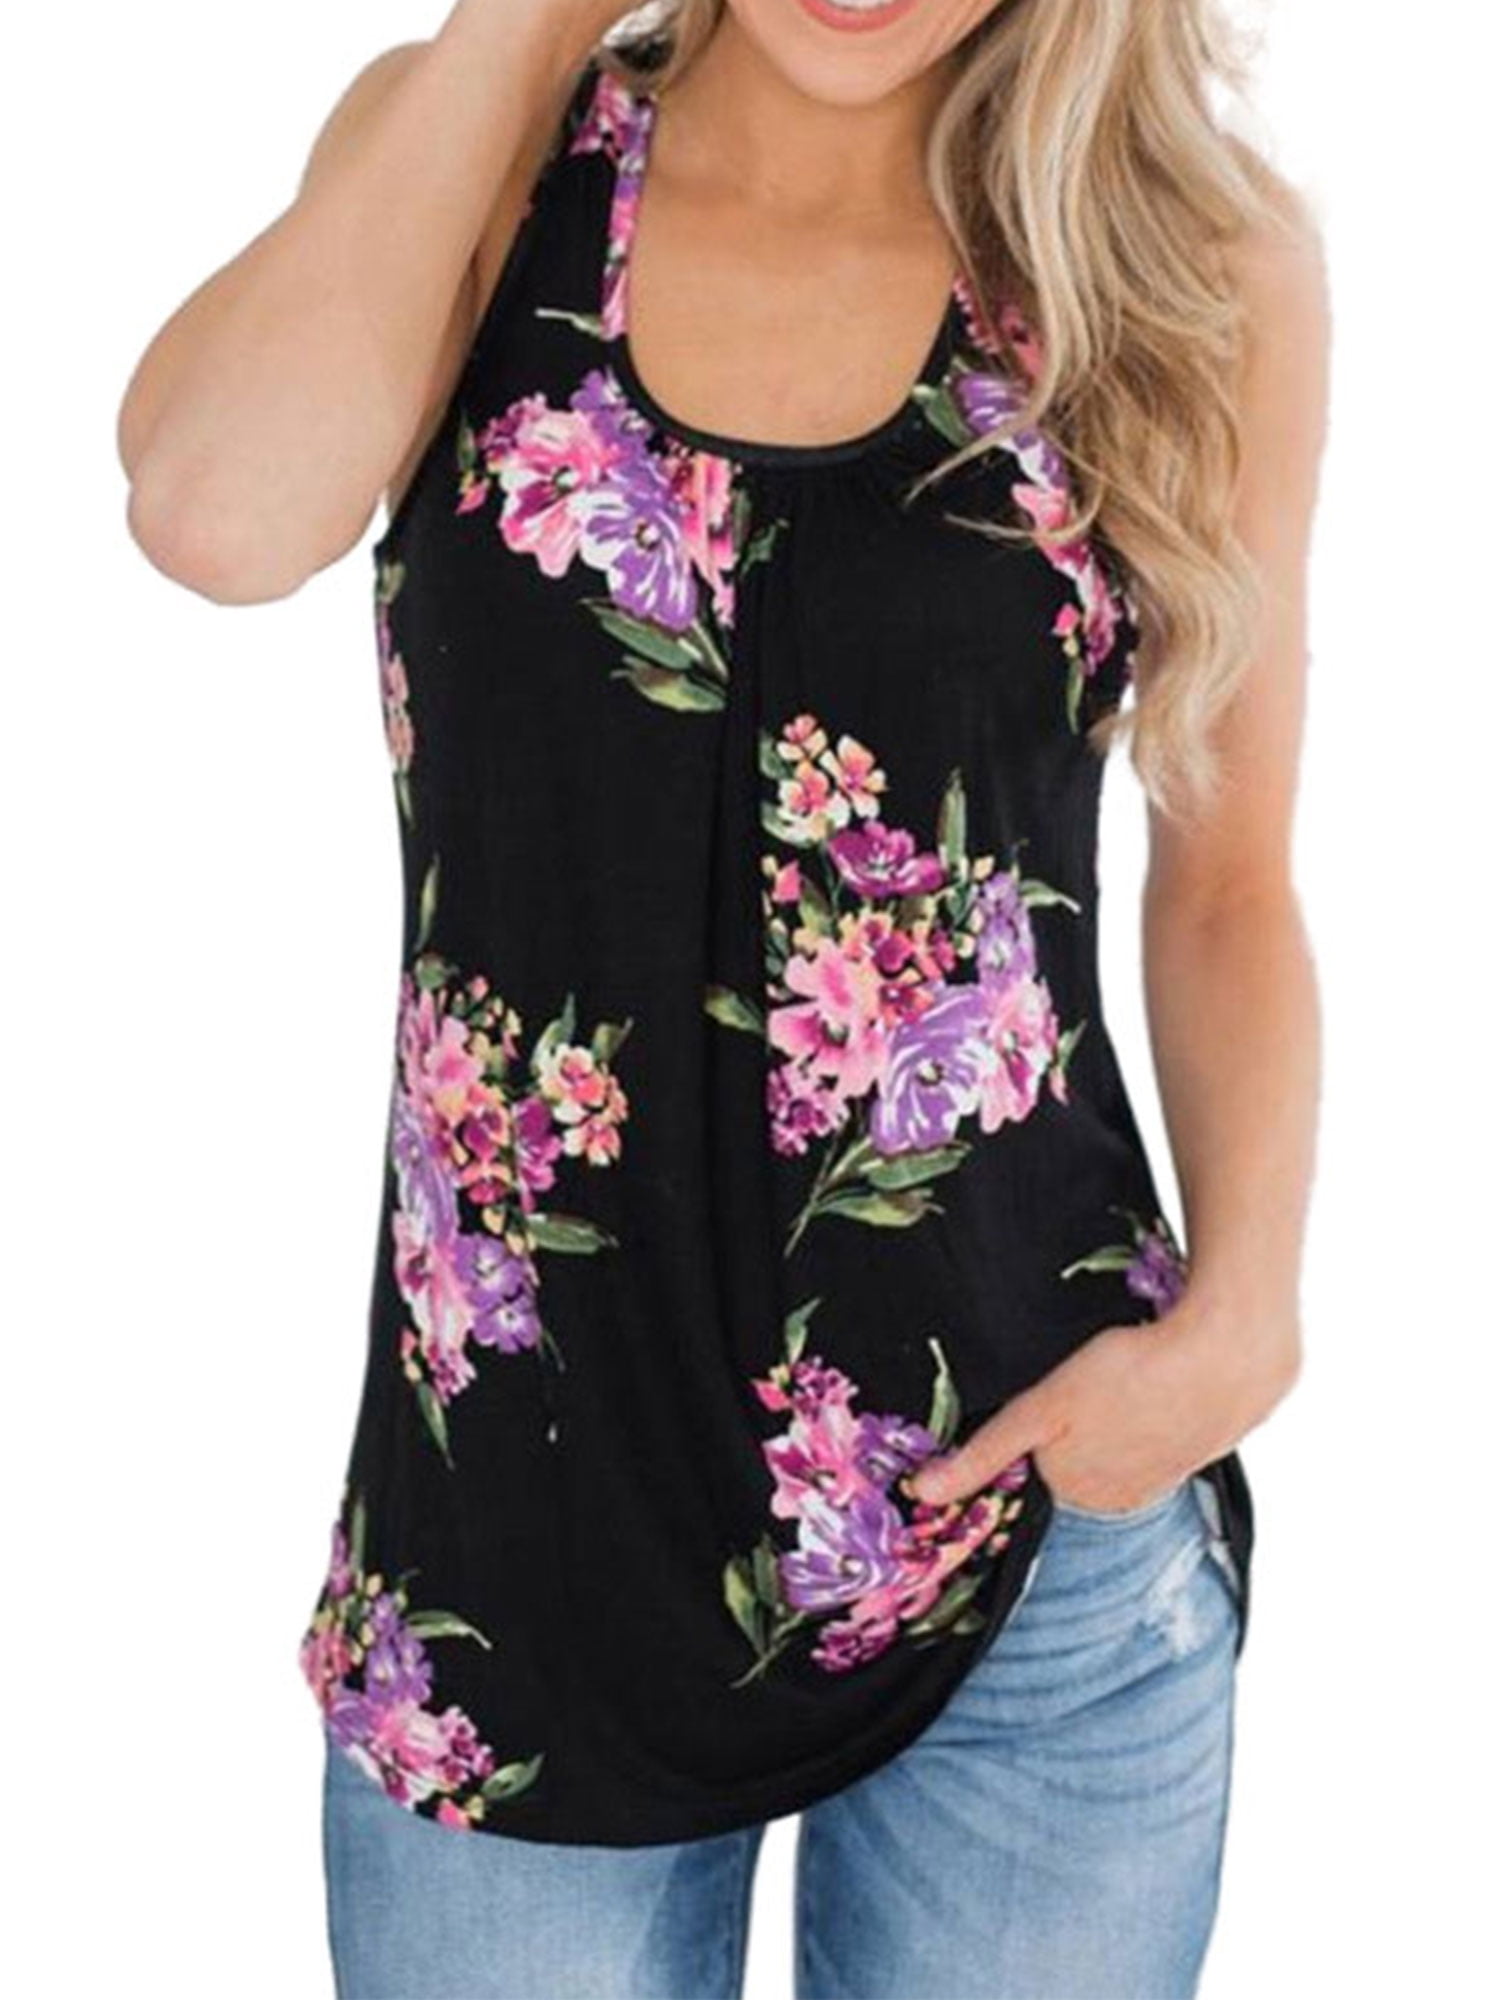 Meikosks Ladies Summer Boho Style Tank Tops Sleeveless T Shirt Daisy Print Vest Plus Size Camisole